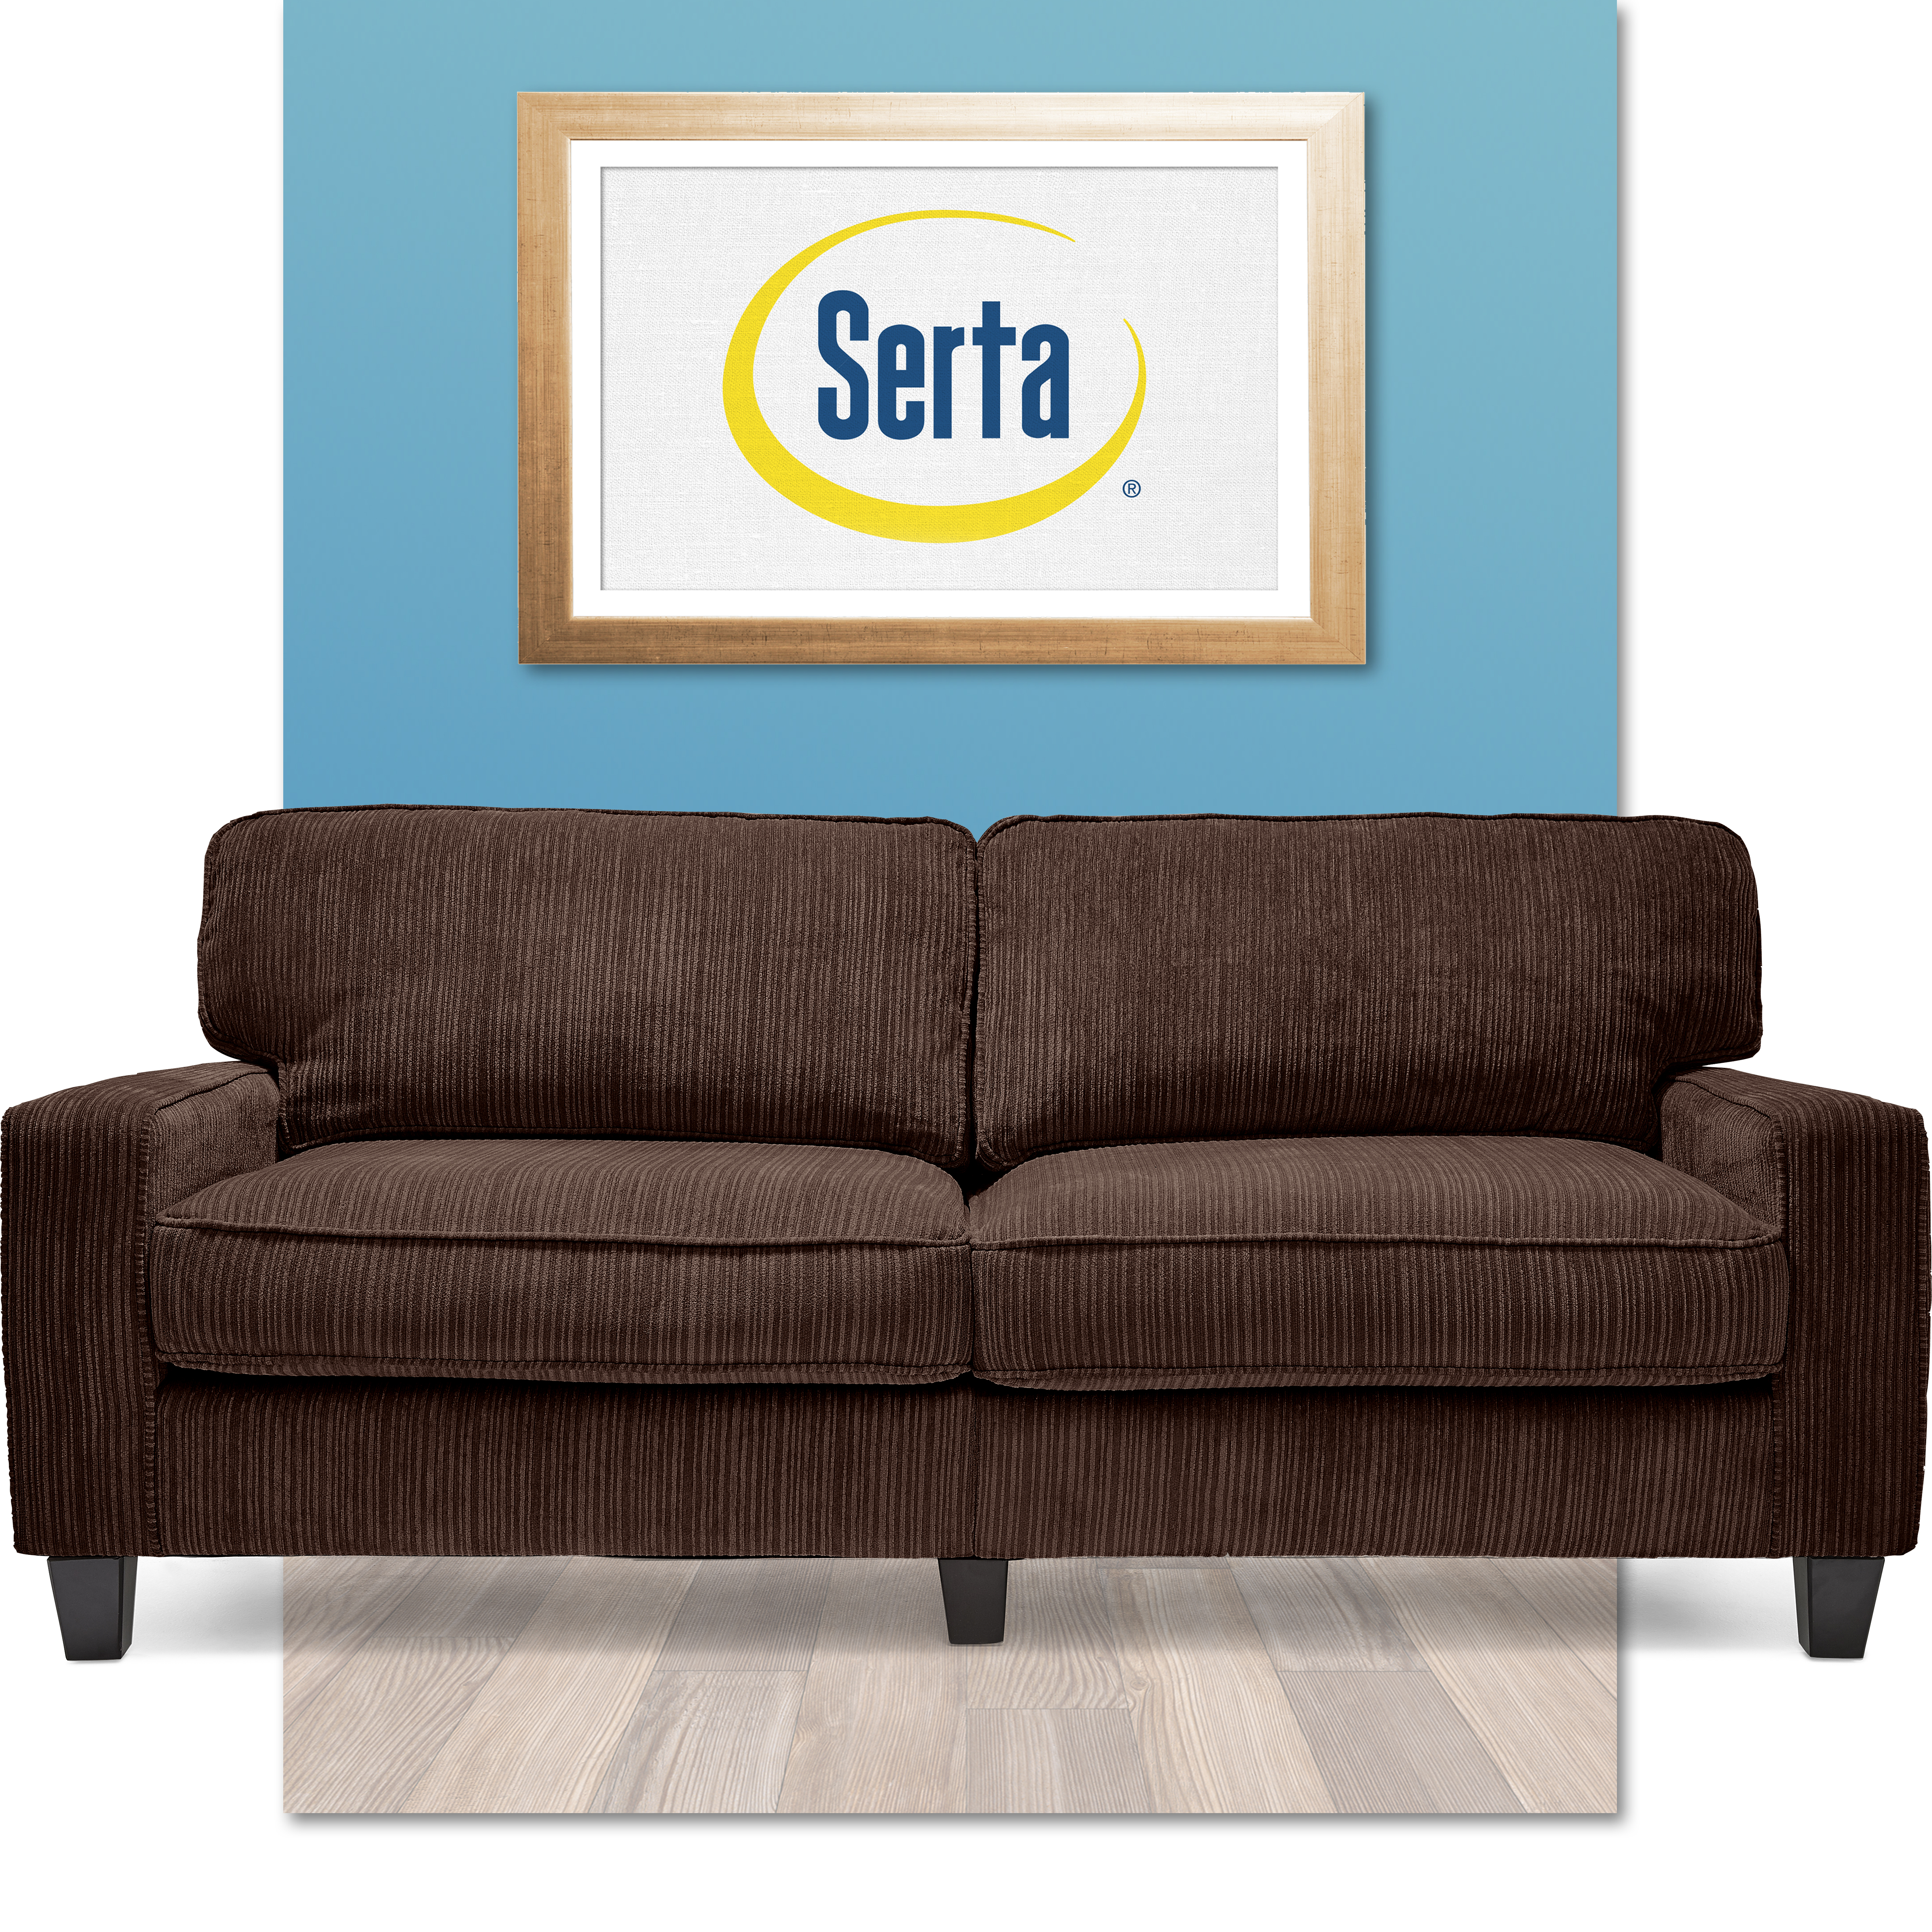 Serta RTA Palisades Collection 78" Sofa in Kingston Brown - image 1 of 12